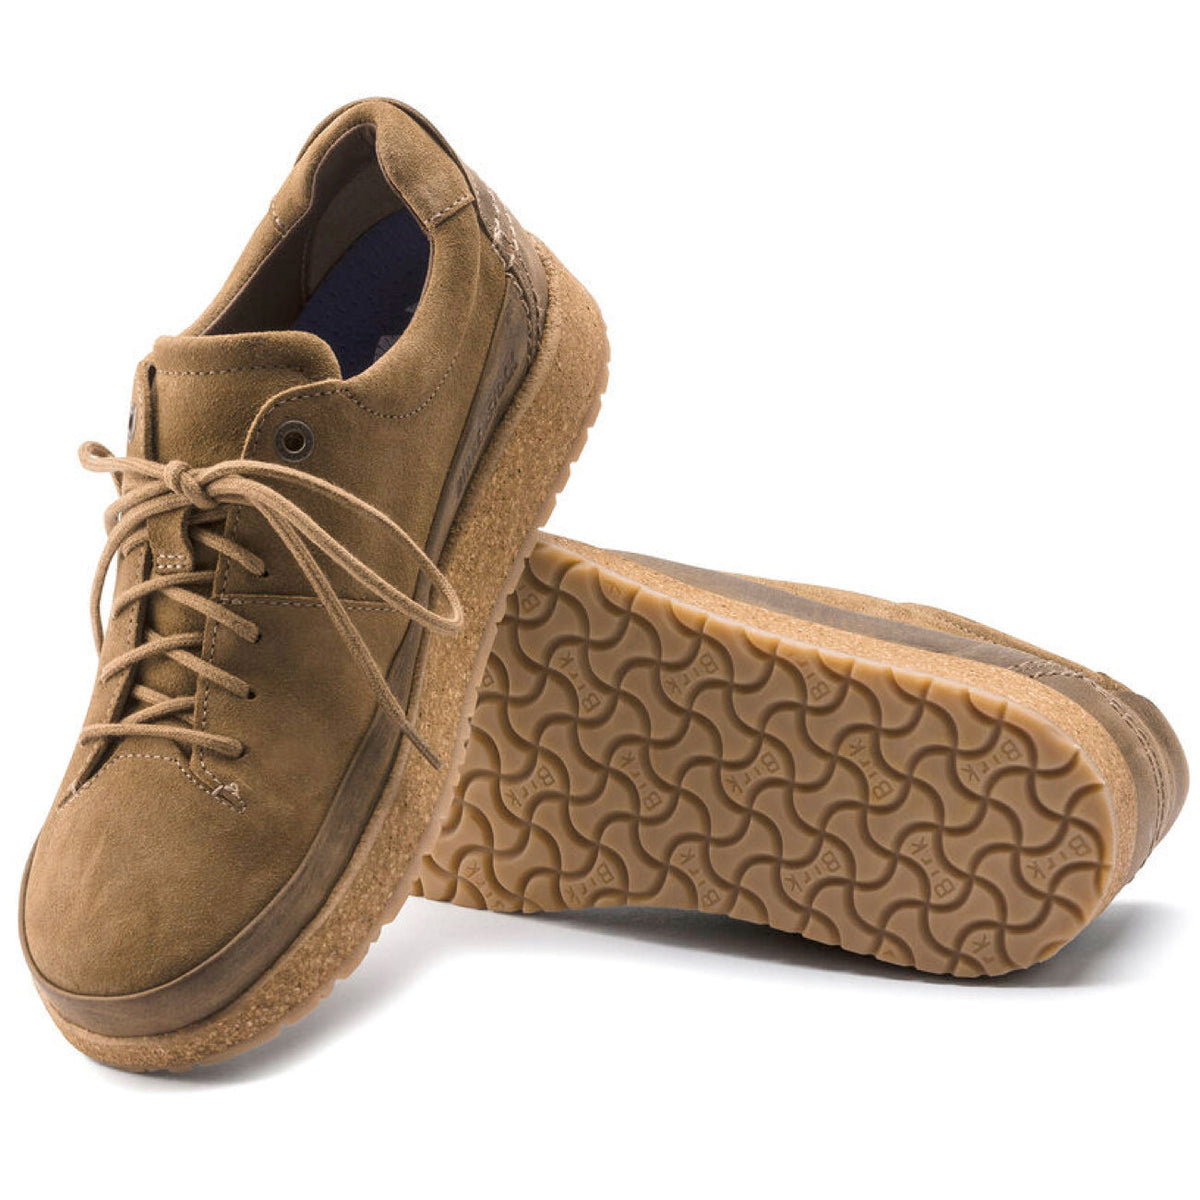 Birkenstock Shoes, Honnef Low, Suede Leather, Regular Fit, Tea Suede Shoes Birkenstock Seasonal 